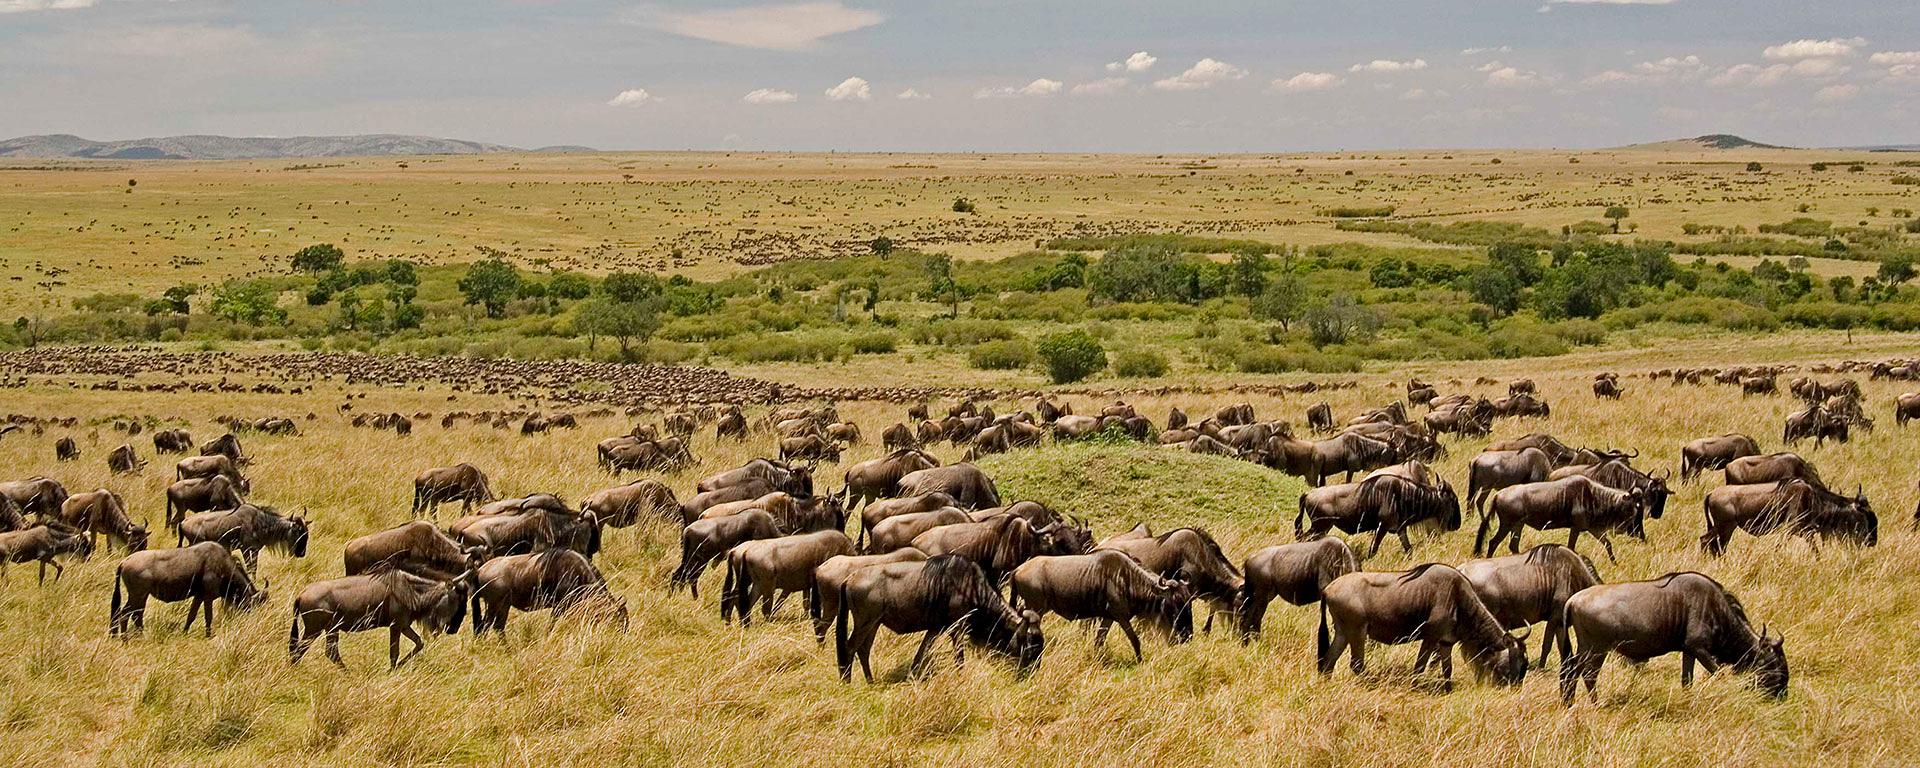 10days-tanzania-safariandadventure